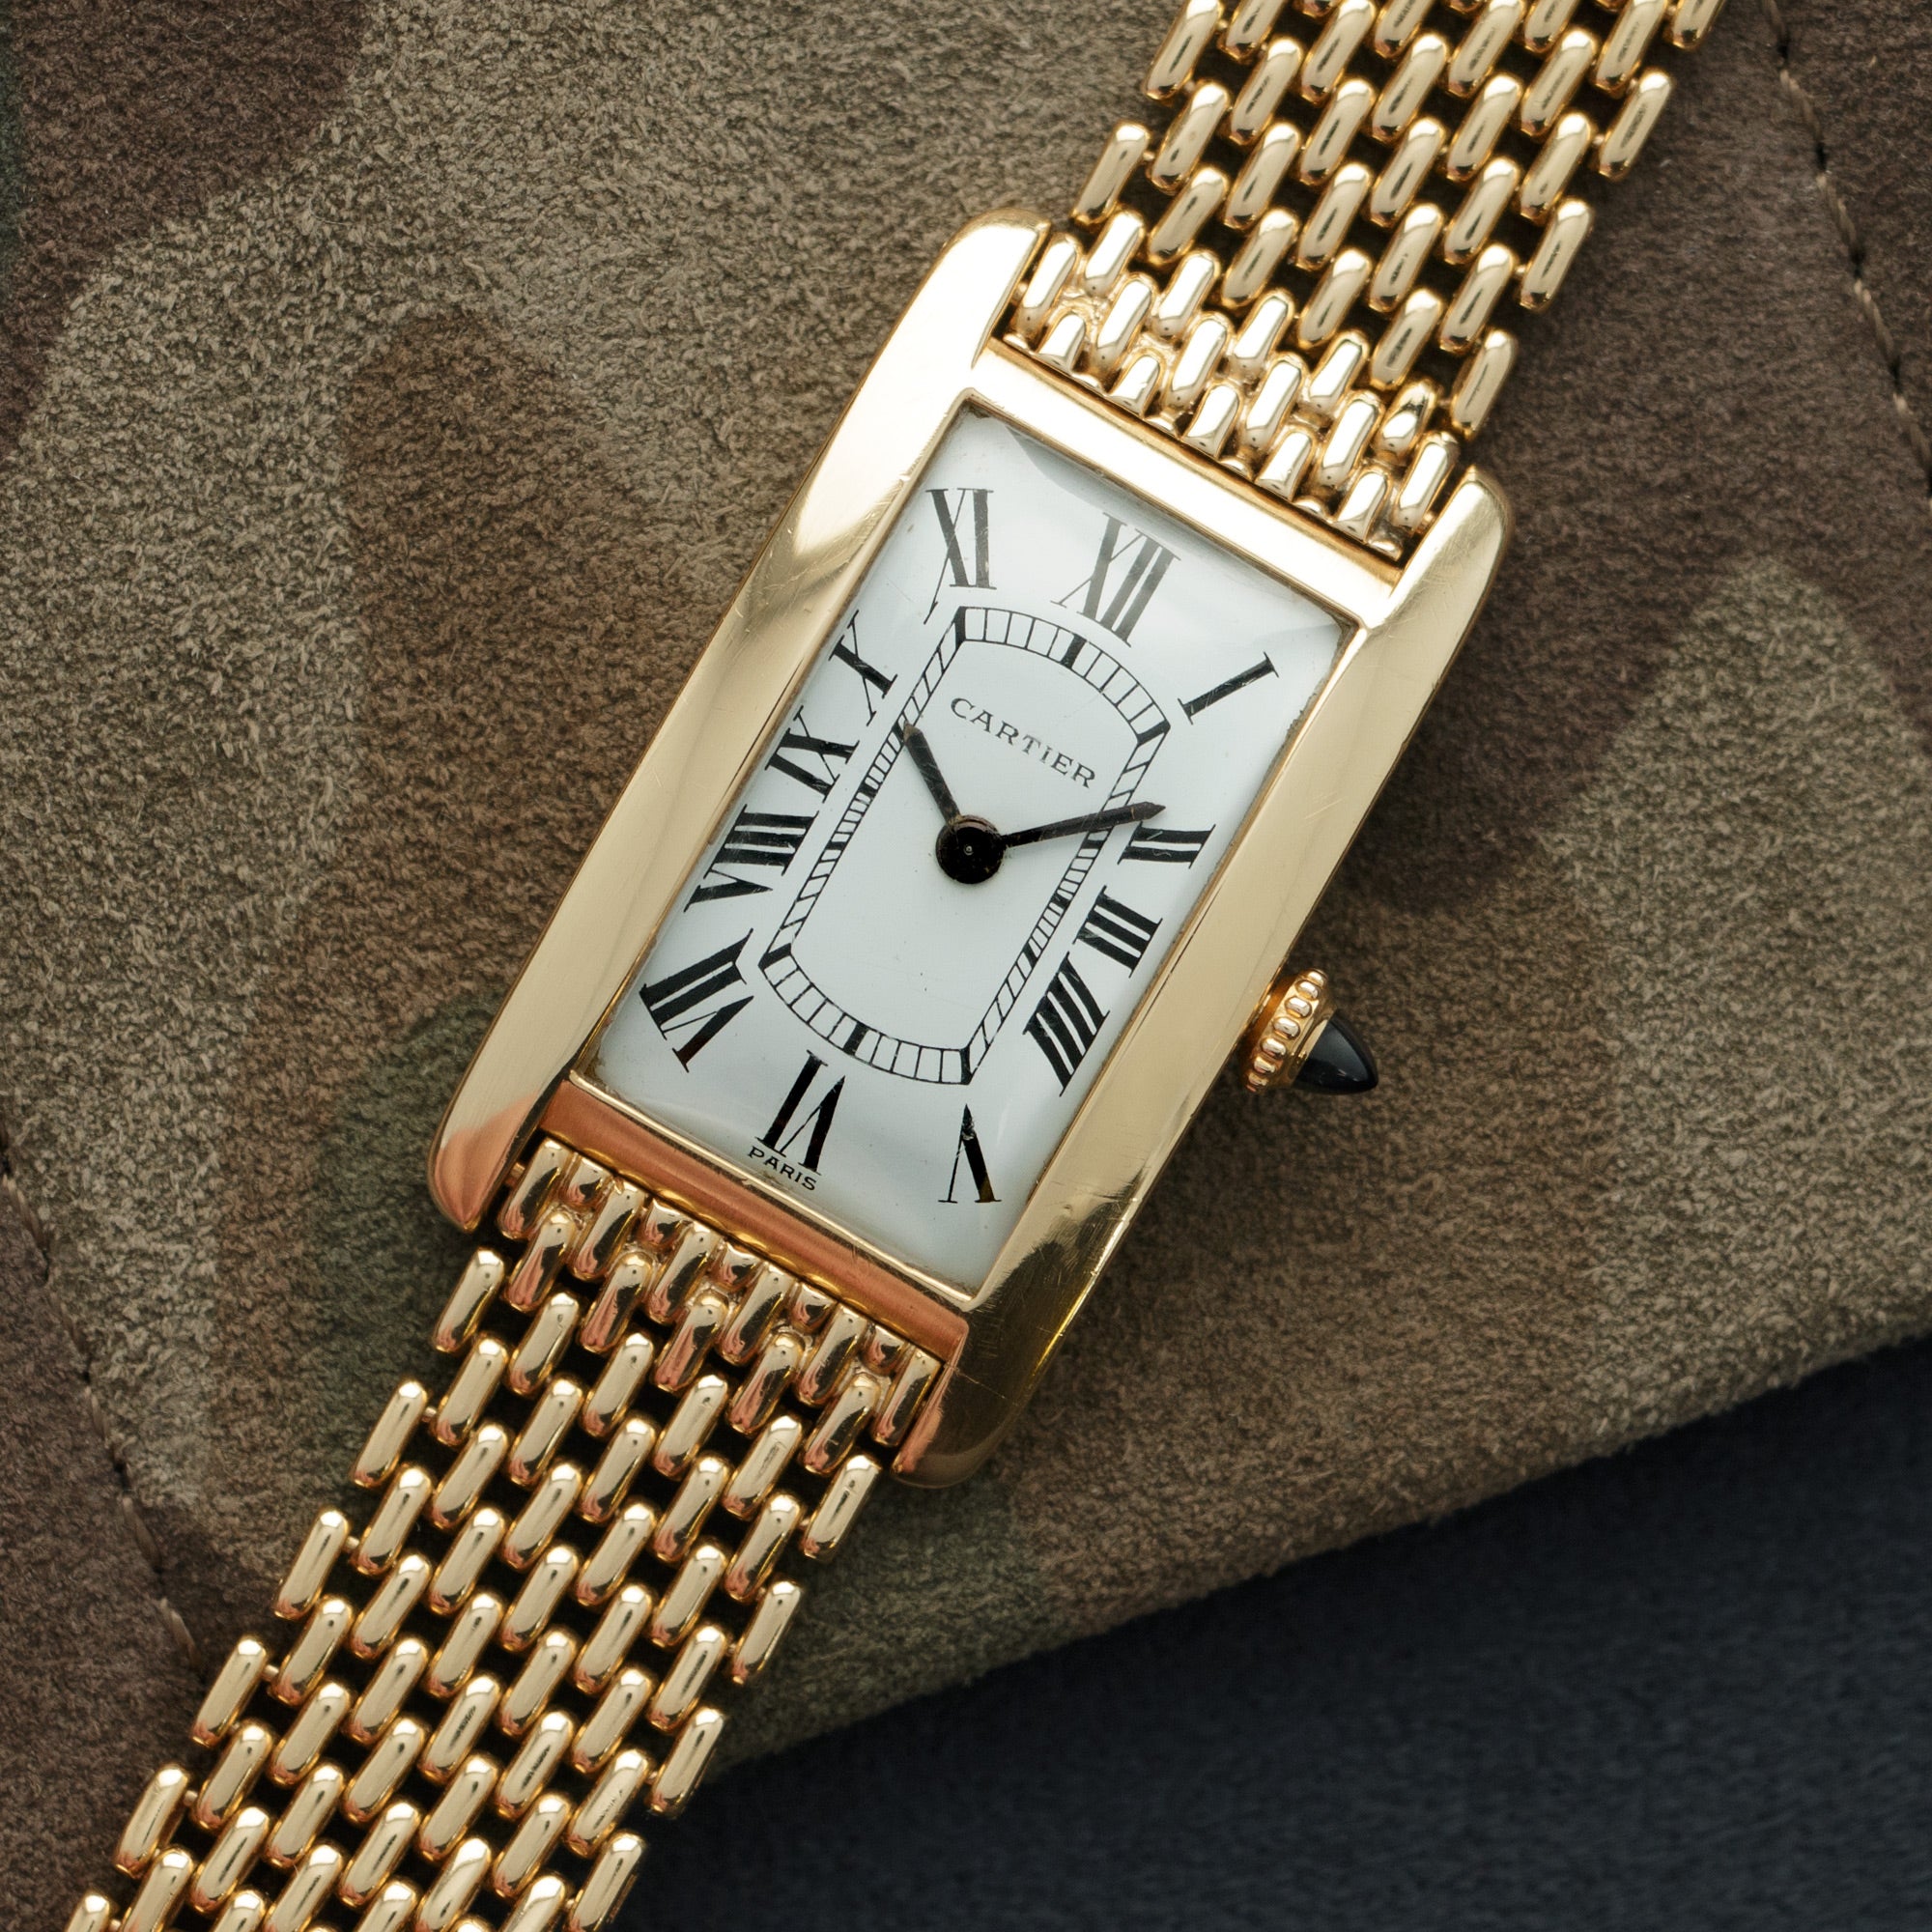 Cartier - Cartier Yellow Gold Tank Cintree Watch, 1930s - The Keystone Watches